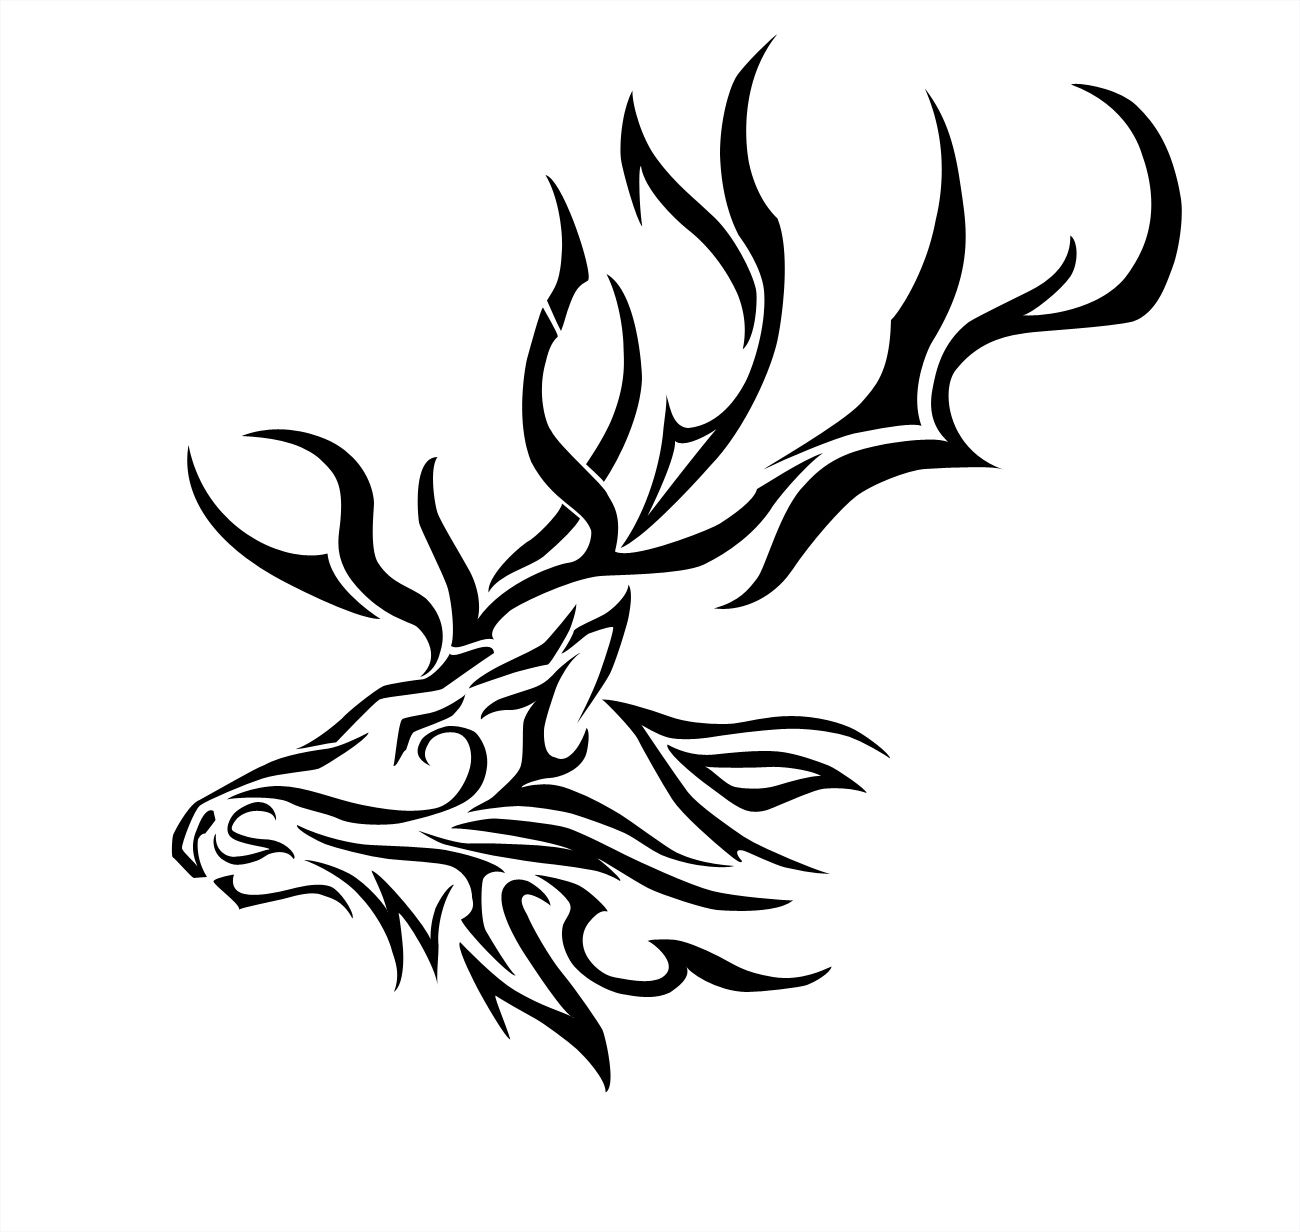 Elk antlers clip art. Antler clipart sketch